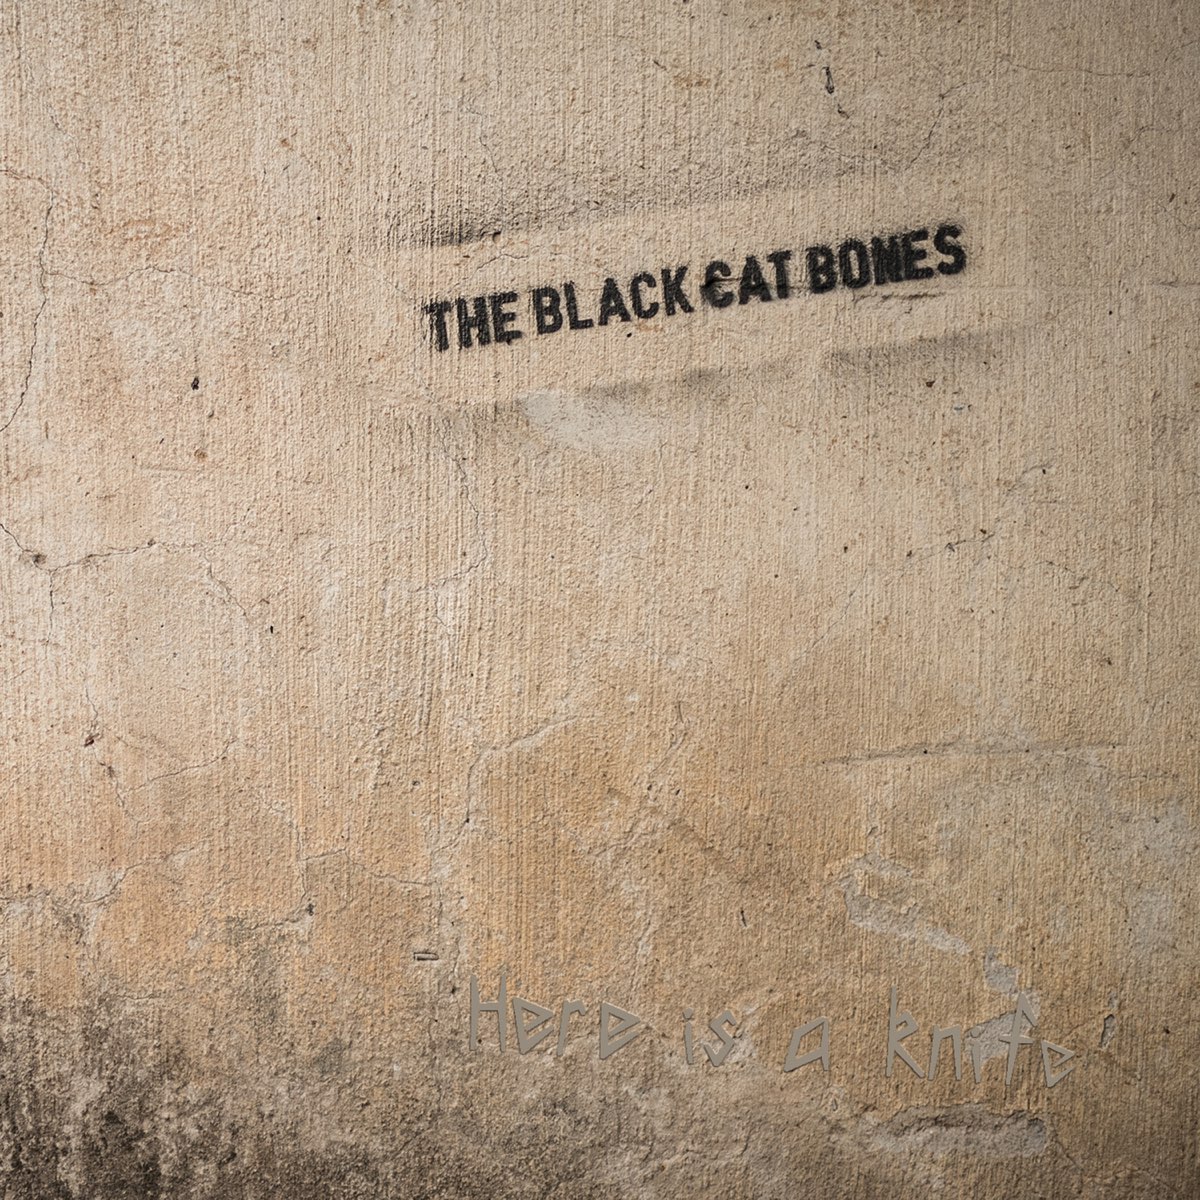 Black cat bone